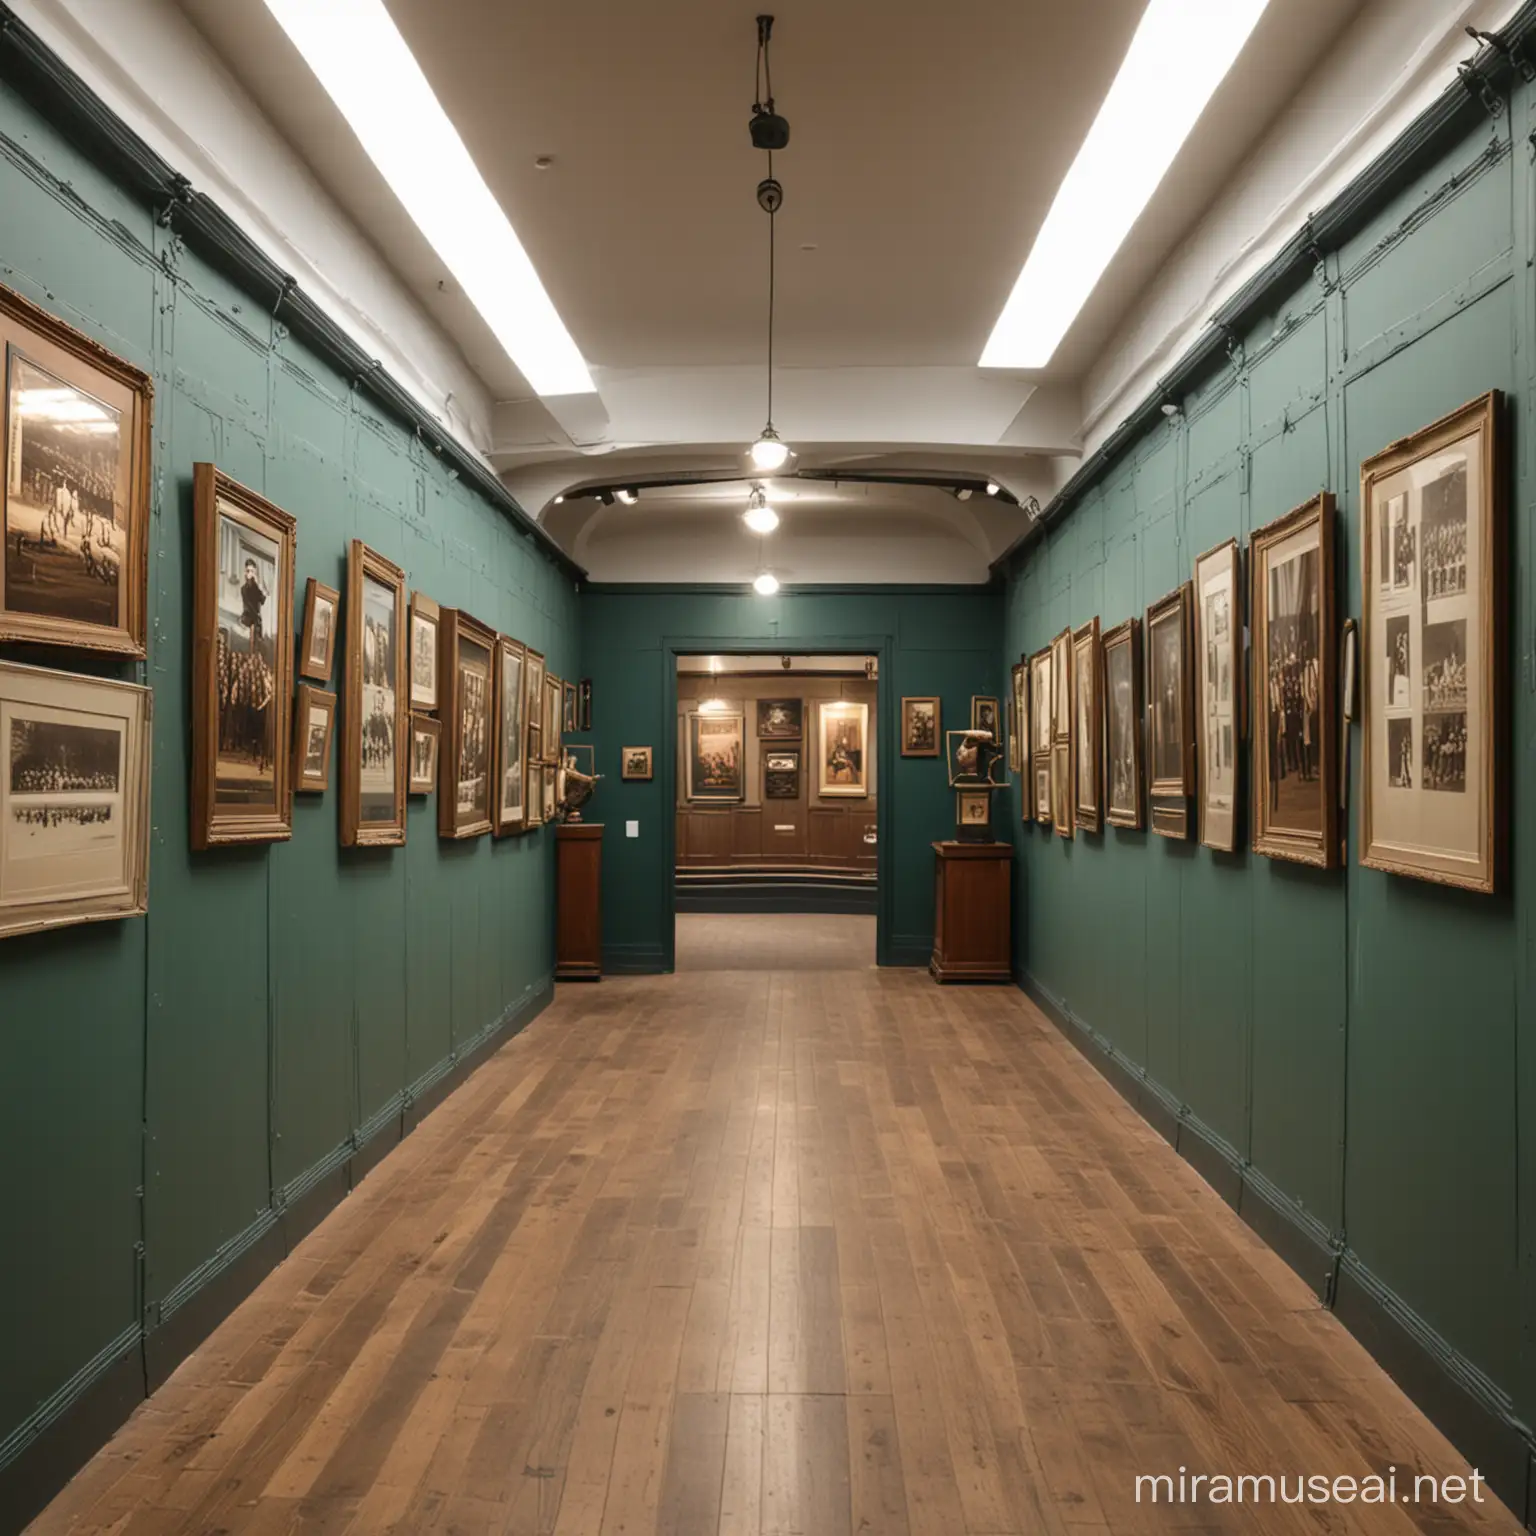 Interior of Cricket Museum Displaying Historic Memorabilia